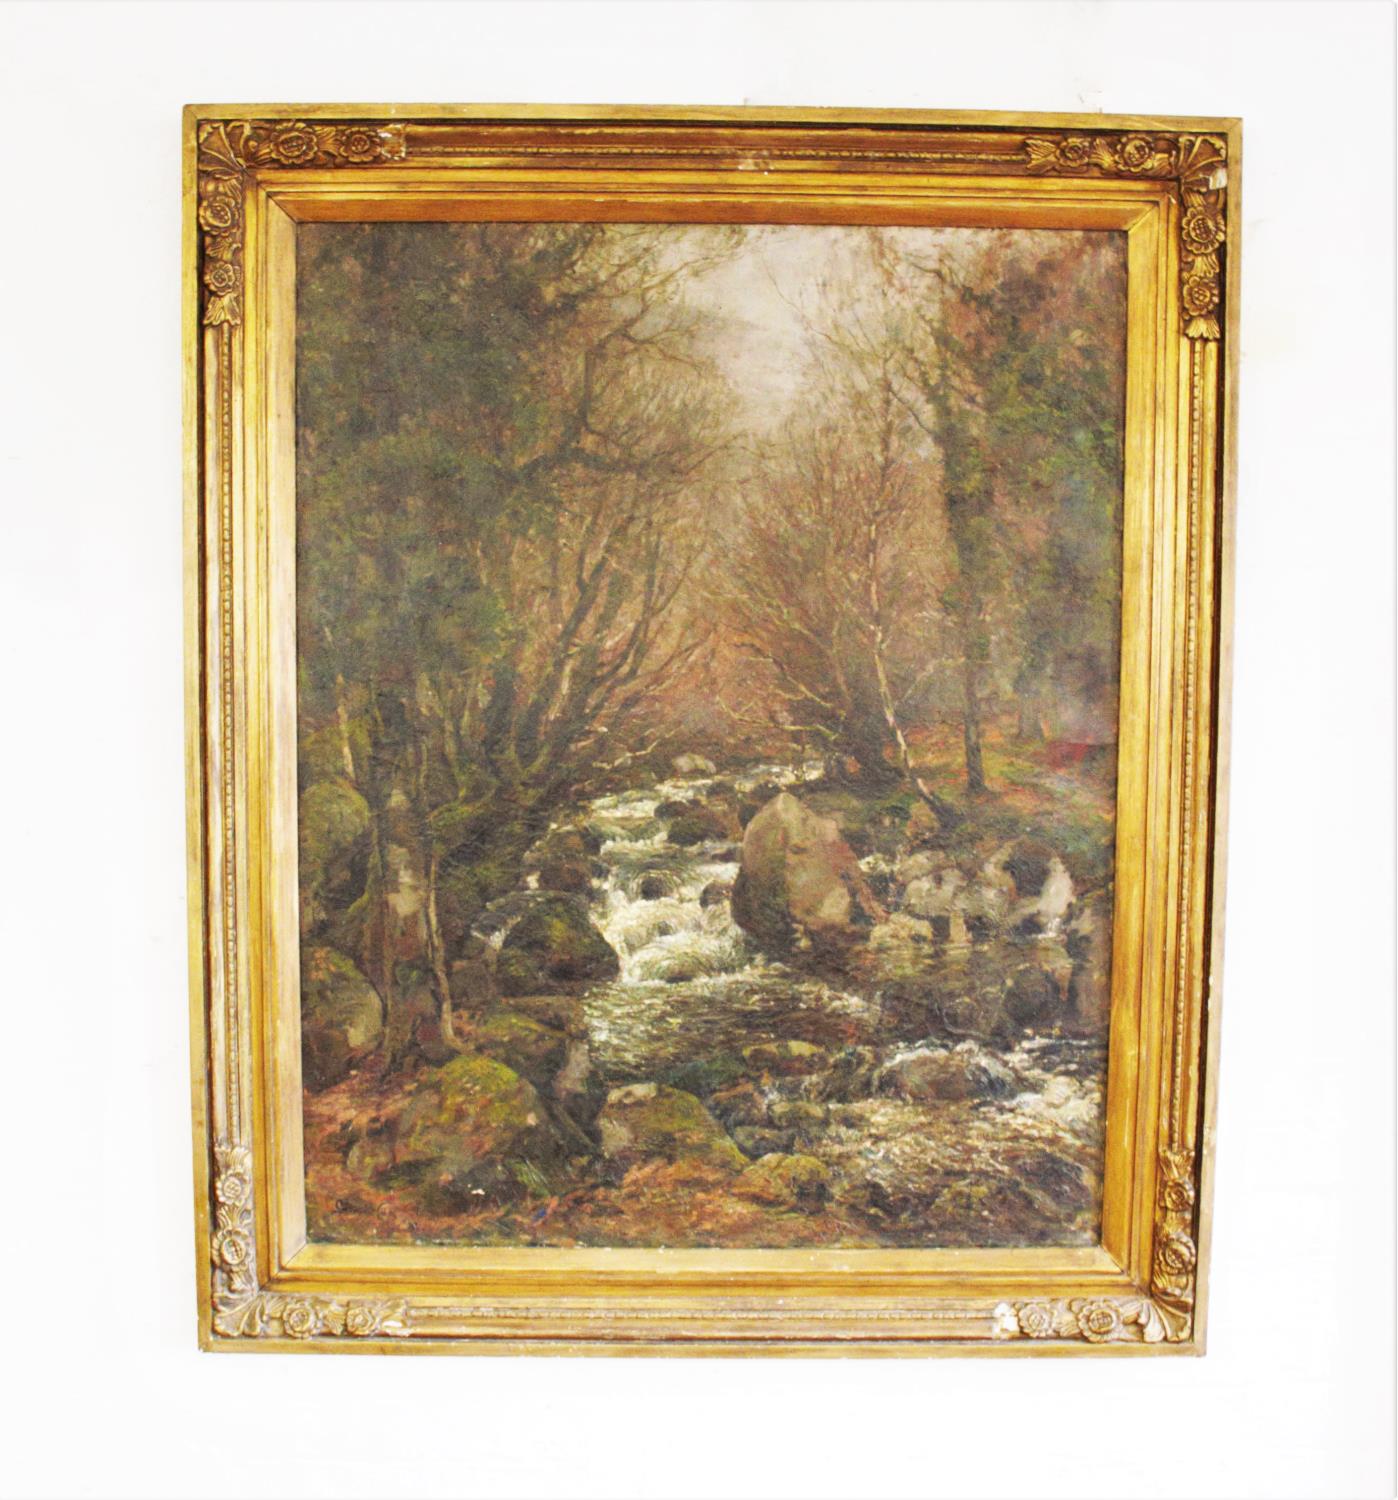 Garstin Cox (1892-1933), Oil on canvas, 'The Torrent, 1913, Devonshire', 126.5cm x 101cm, Signed